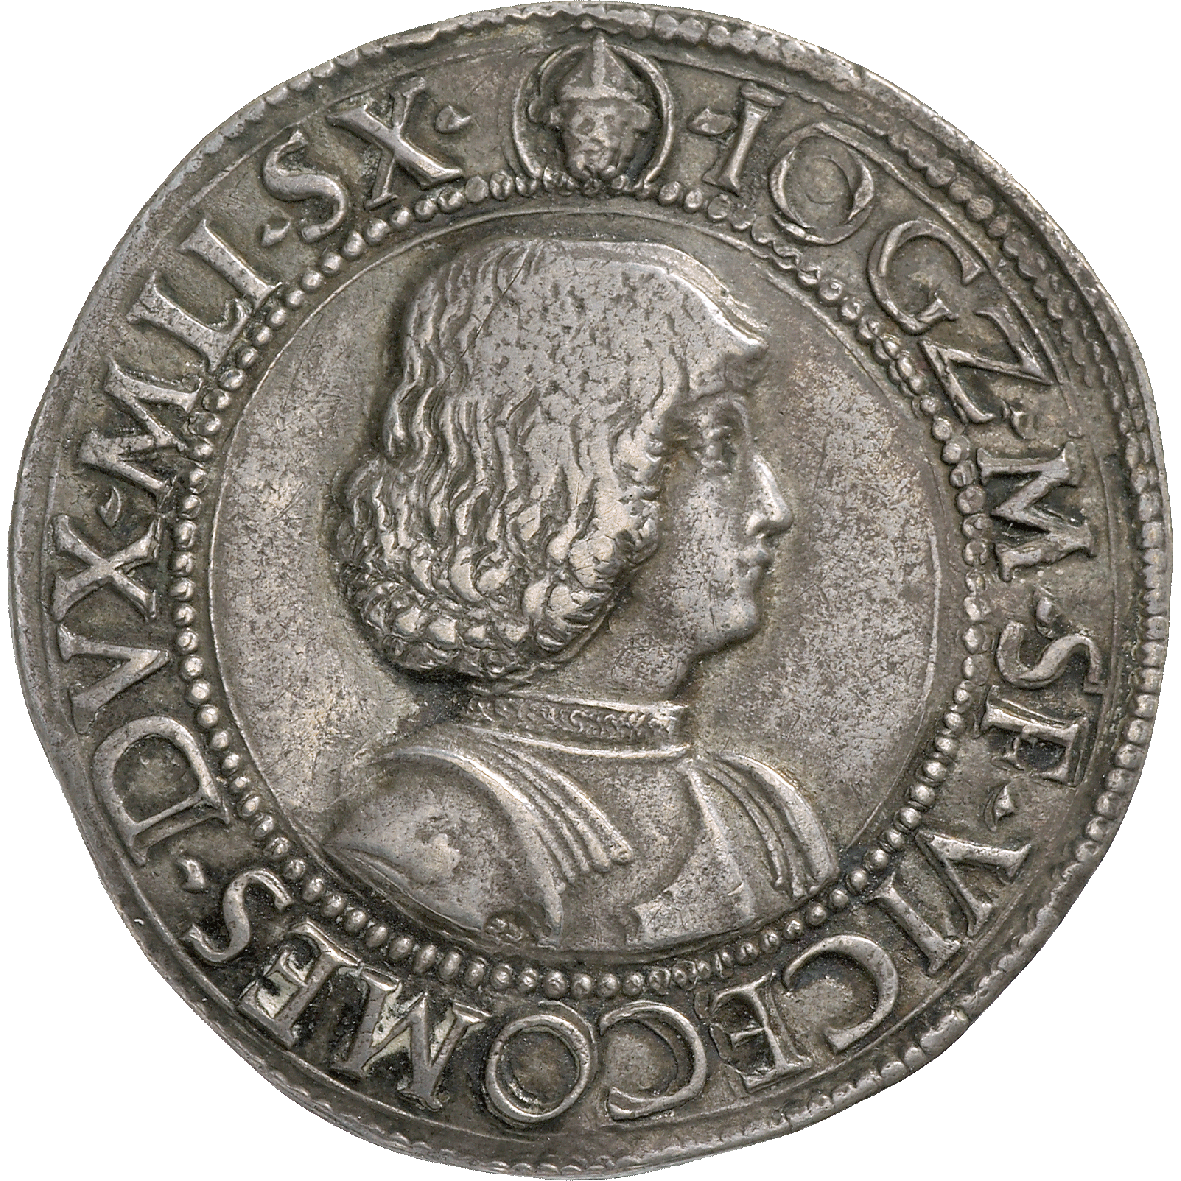 Duchy of Milan, Giovanni Galeazzo Maria Sforza, Testone (obverse)